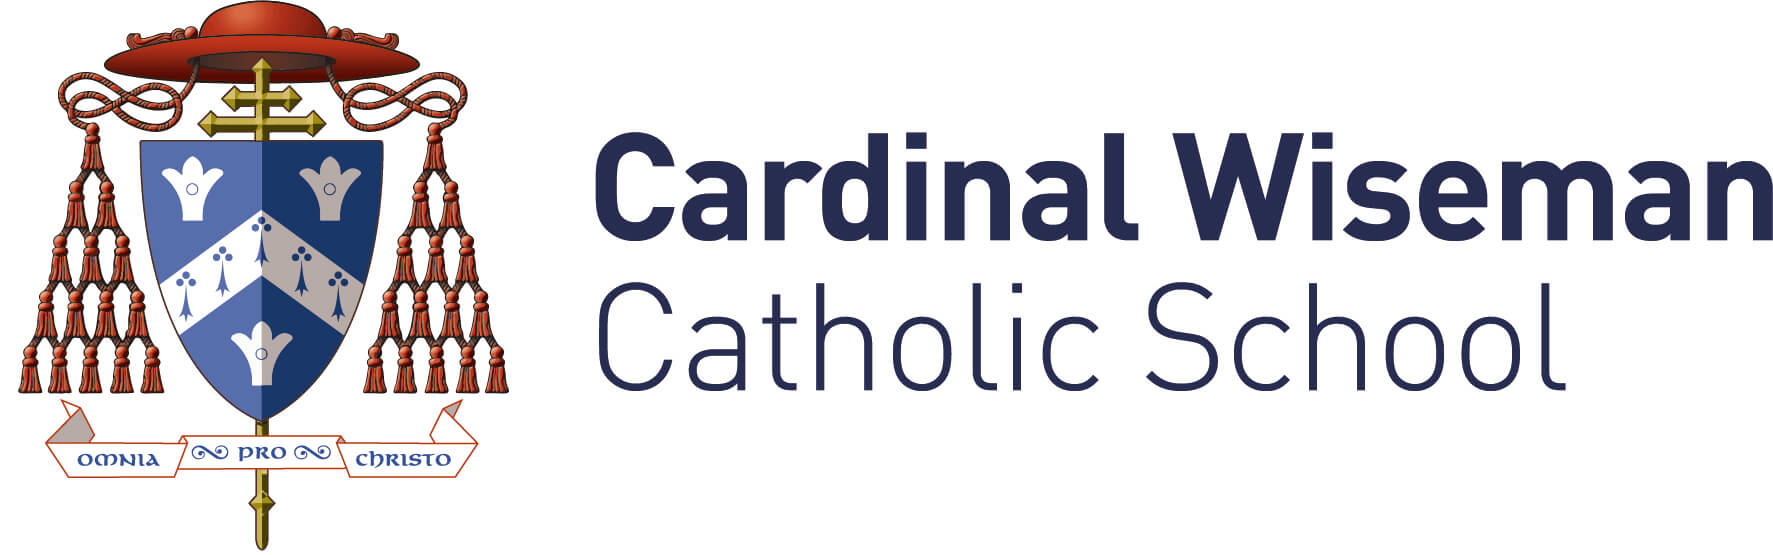 Cardinal Wiseman Catholic School, Coventry校徽